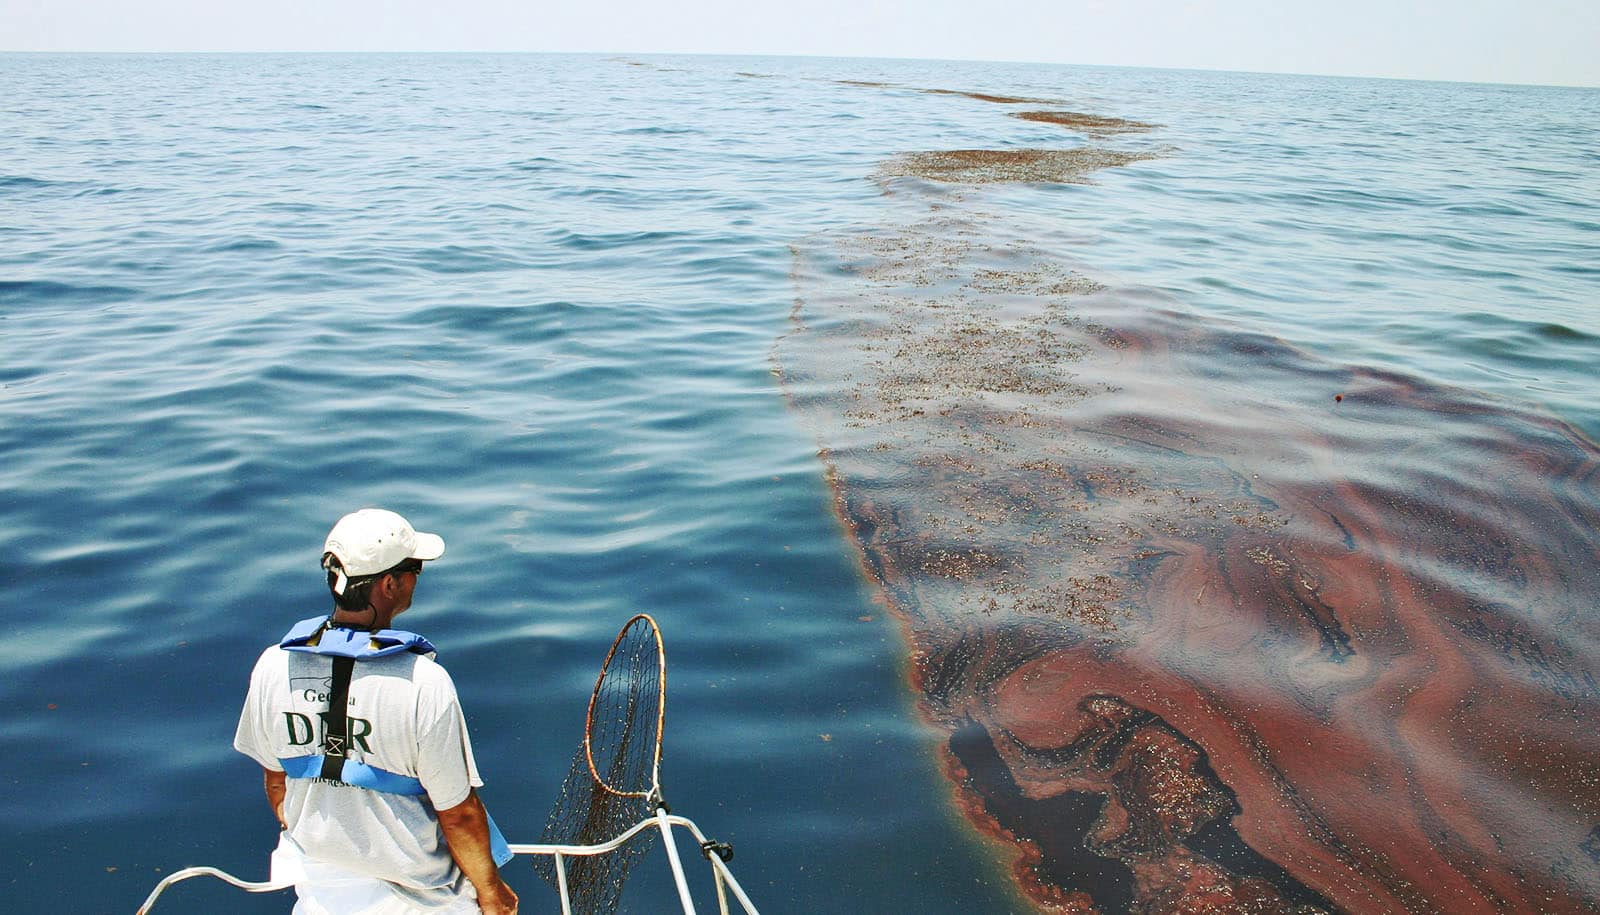 How Do Oil Spills Affect Marine Ecosystems